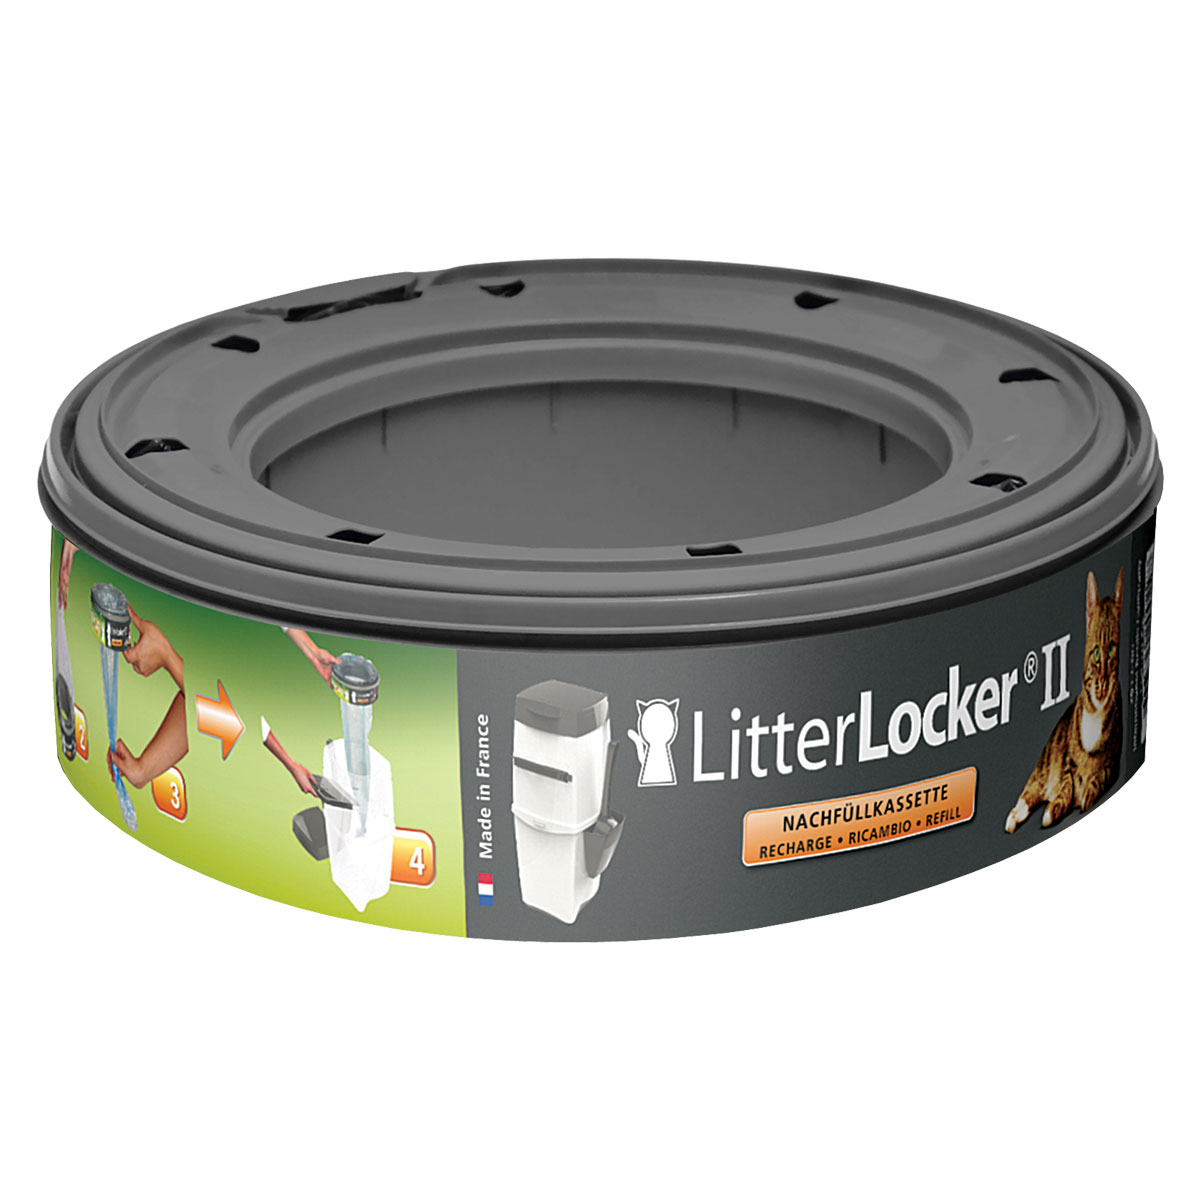 LitterLocker II – Nachfüllkassette 1 Stück